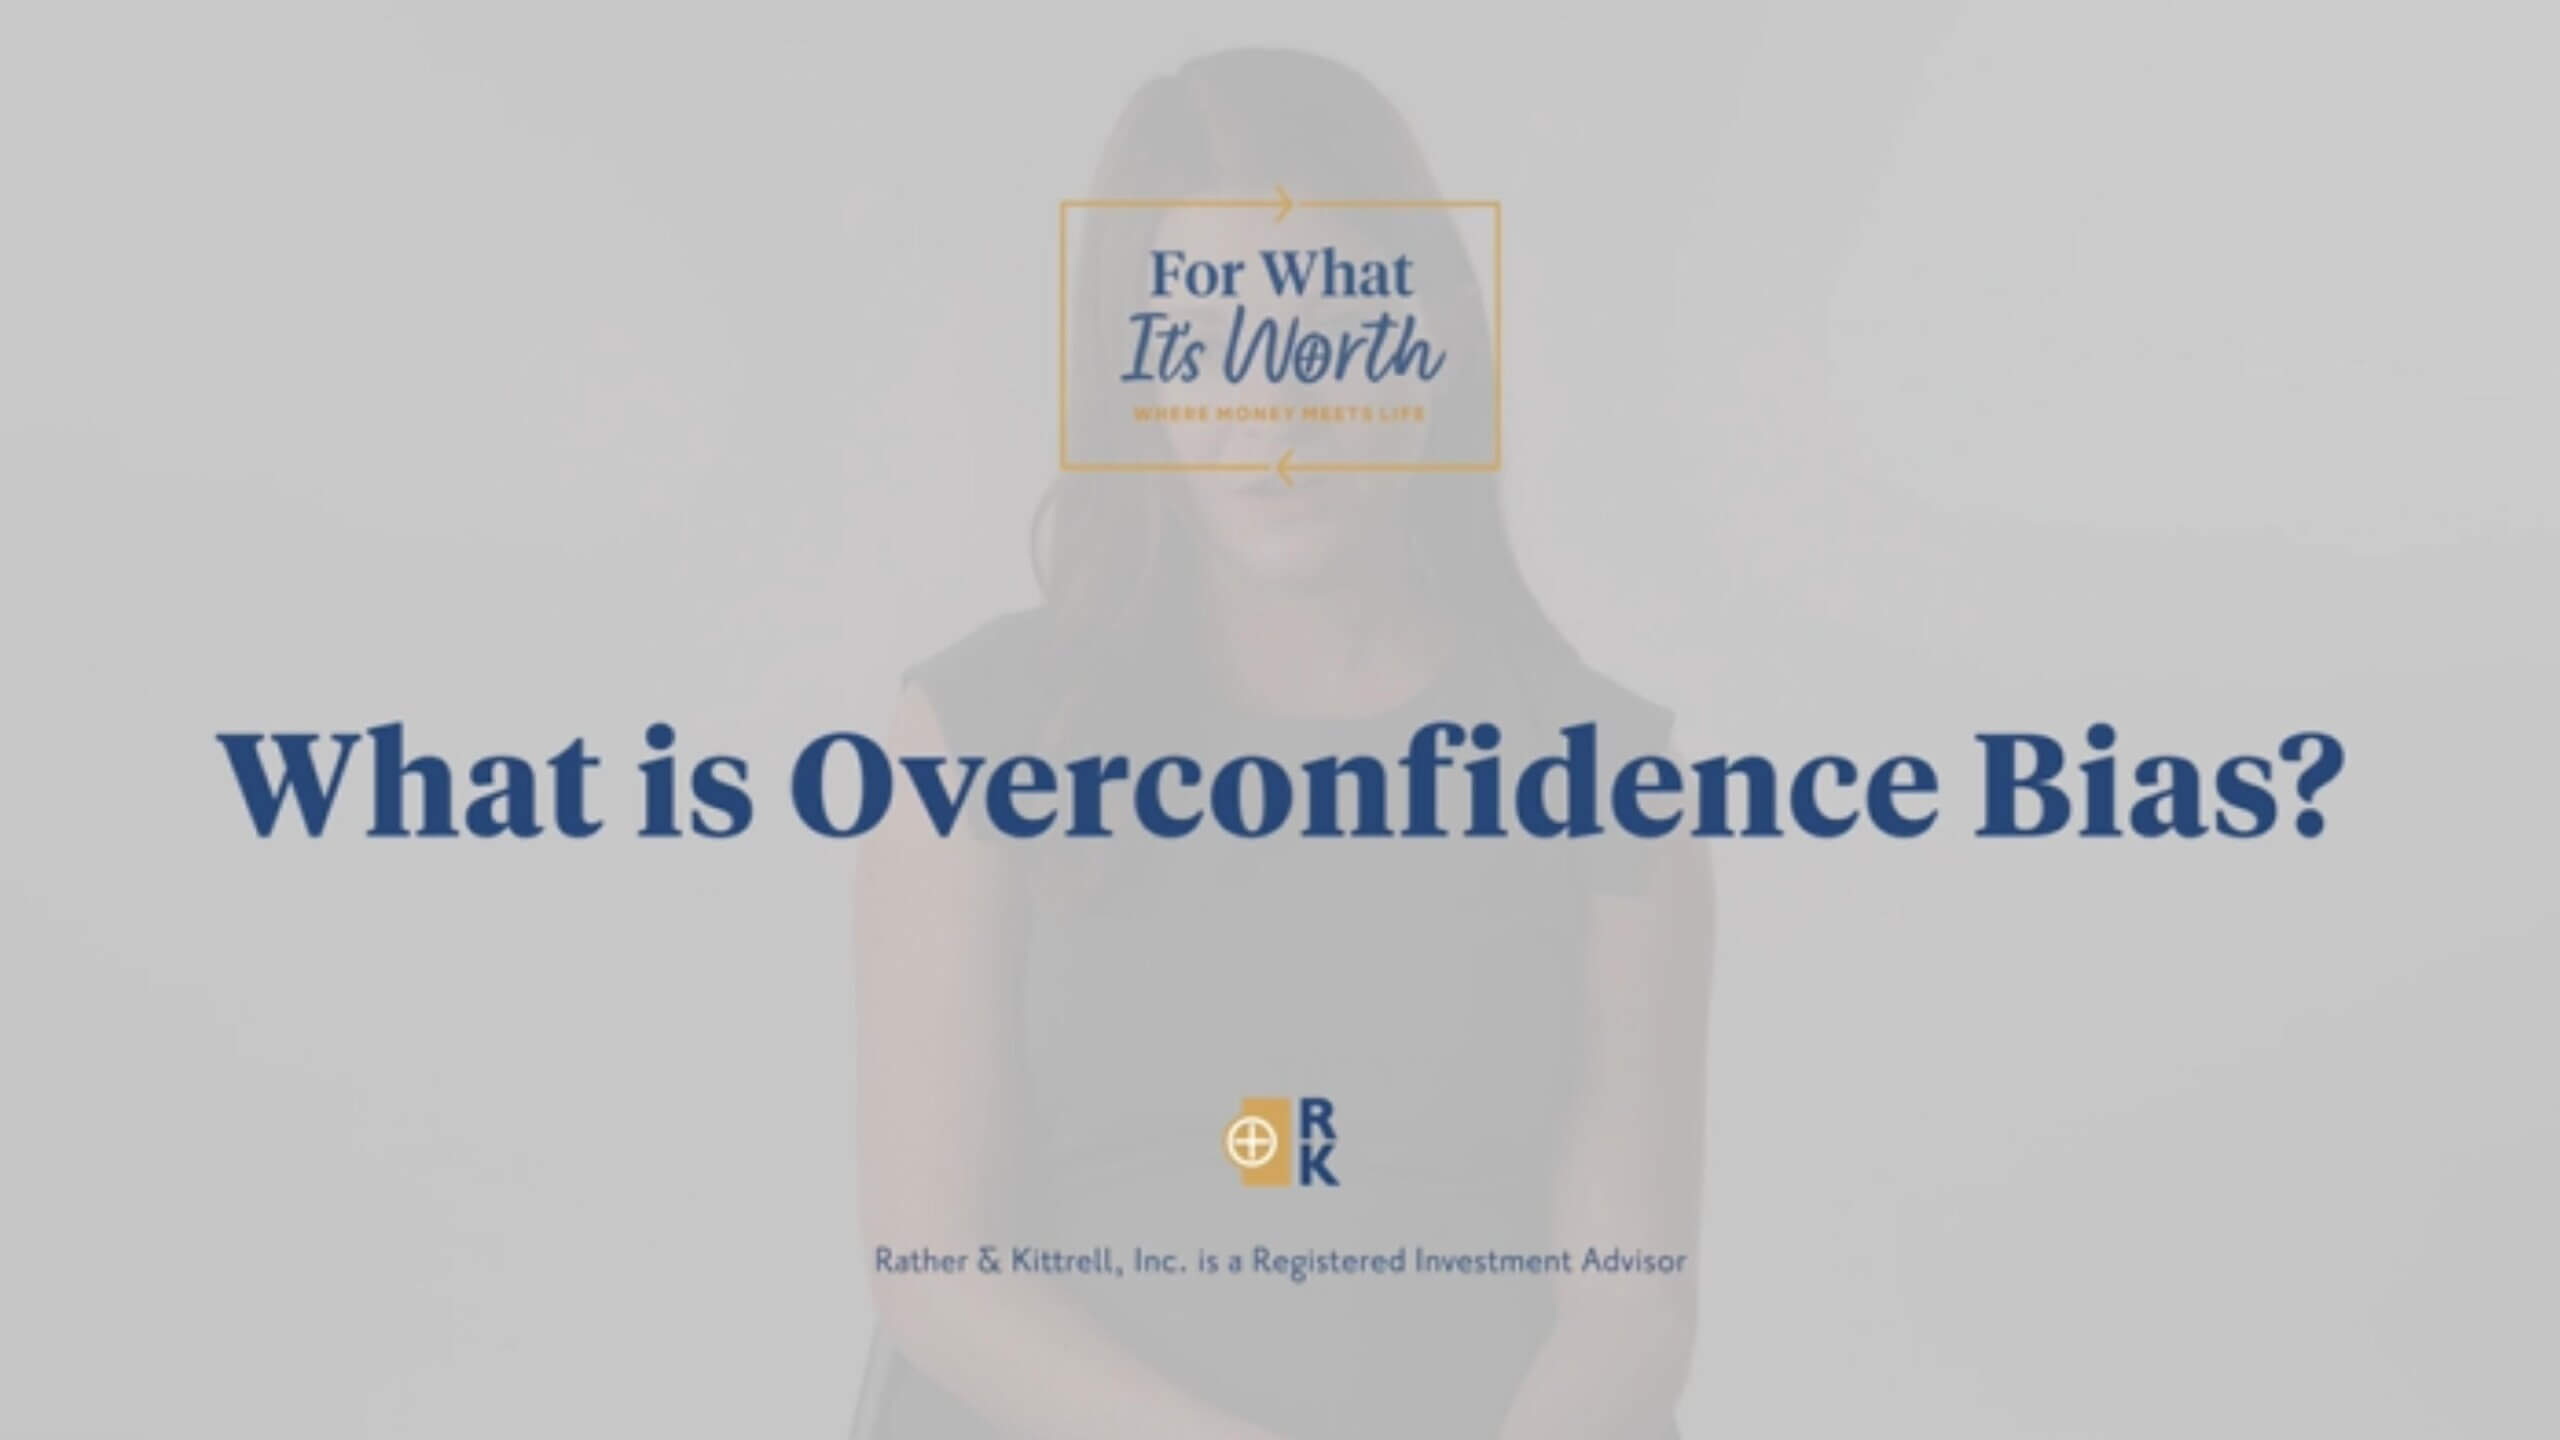 What is overconfidence bias?